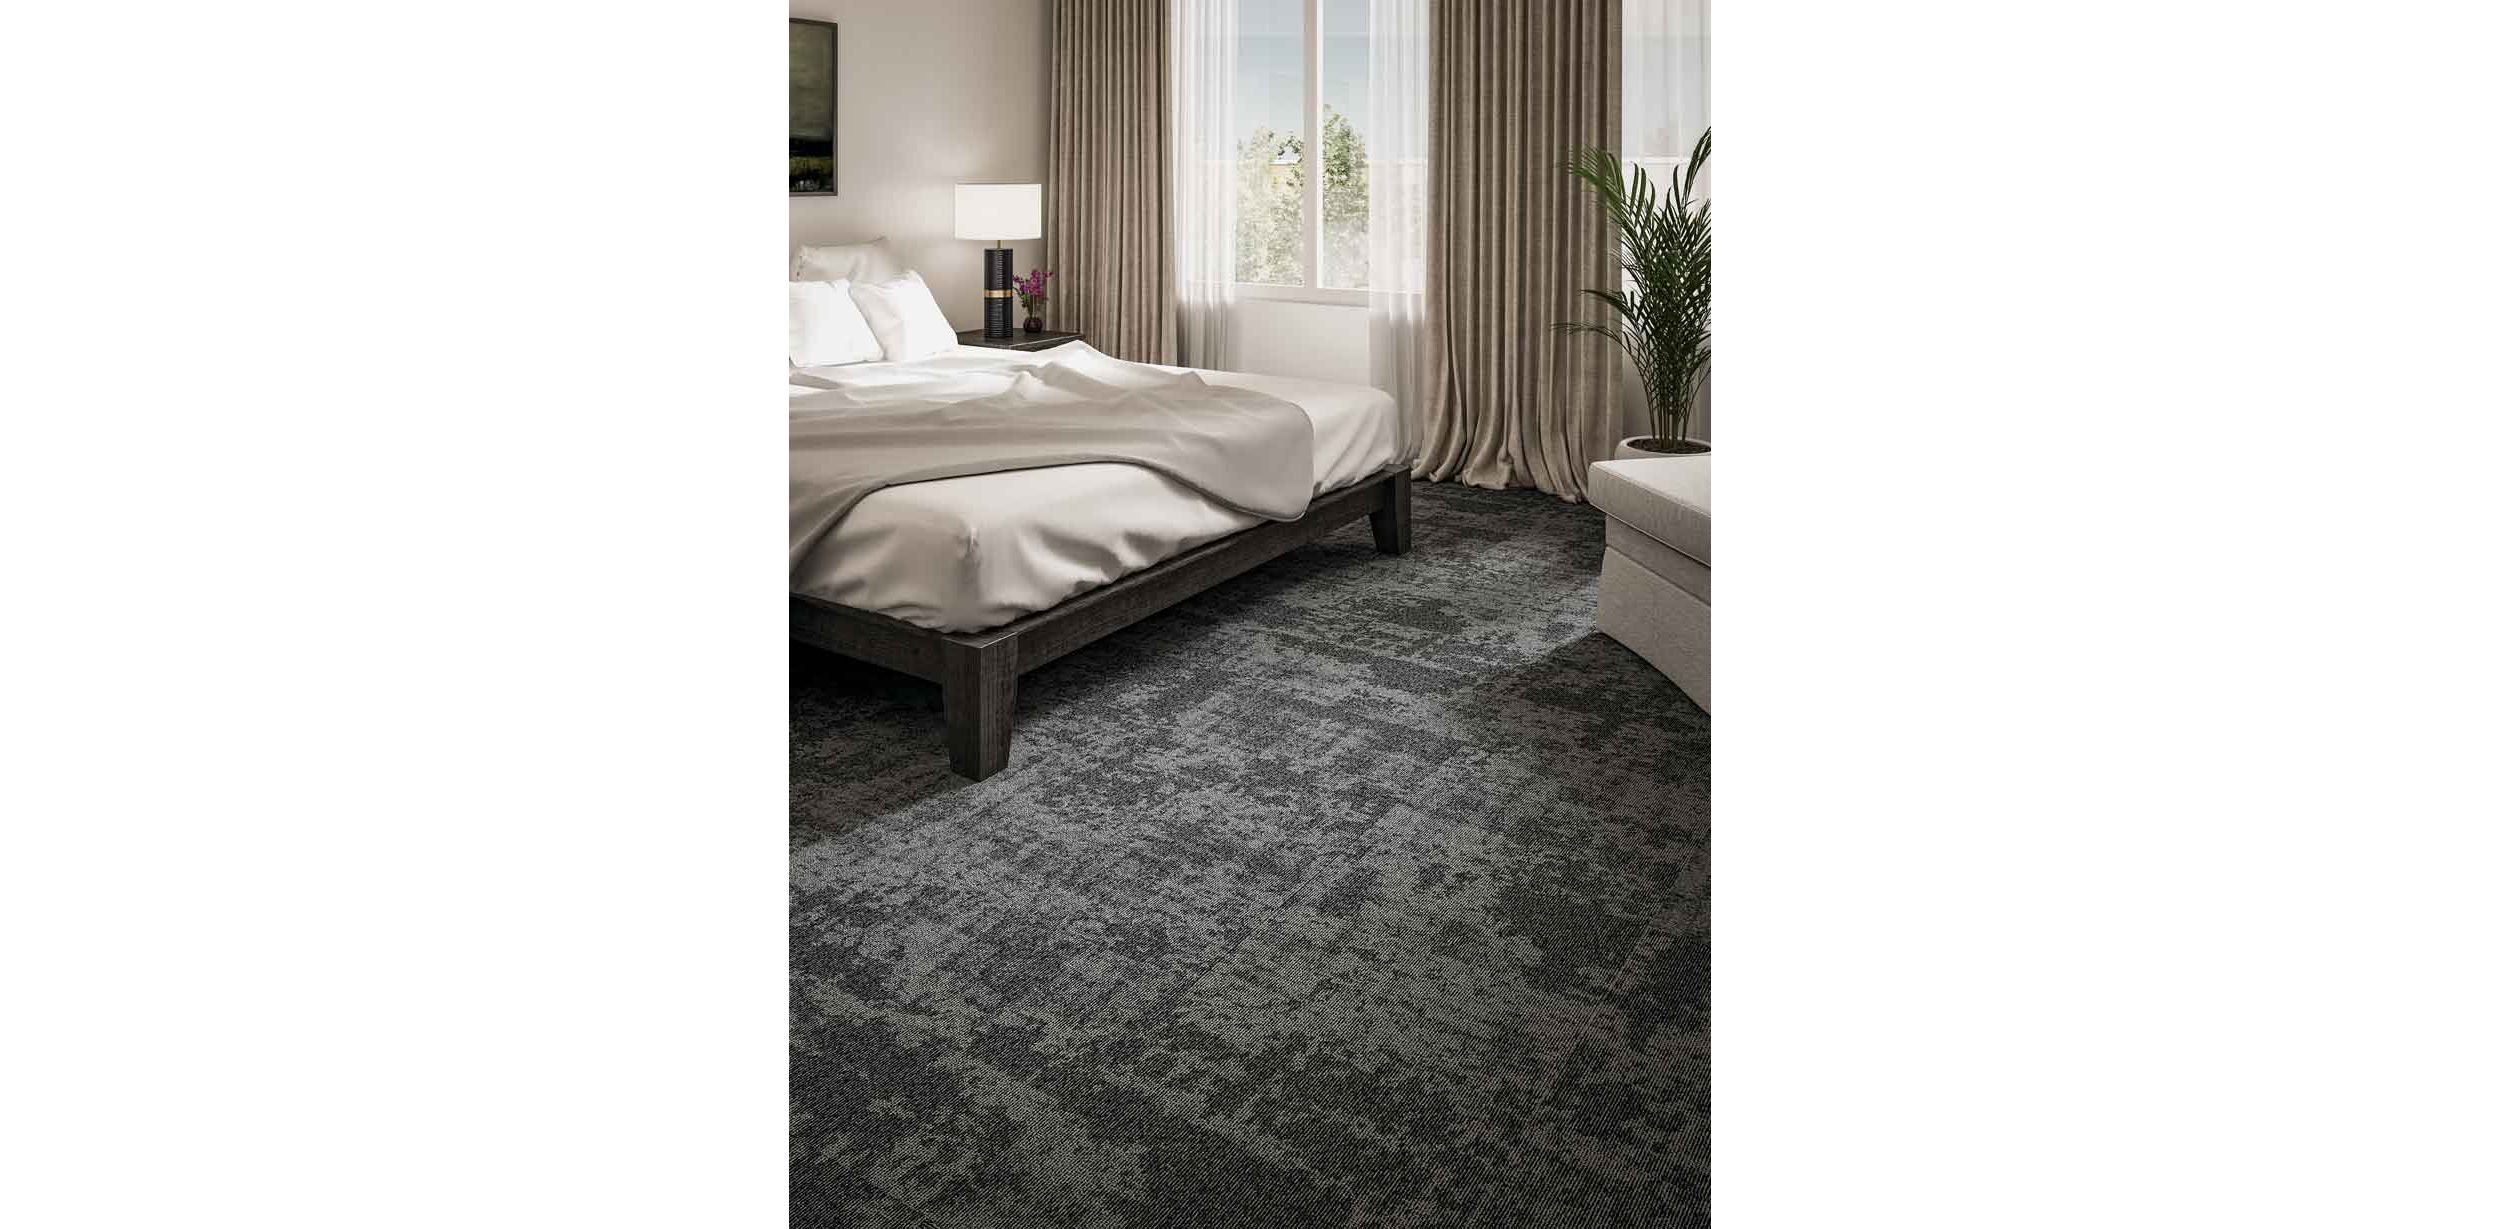 Interface Cloud Cover carpet tile in upscale hotel guest room imagen número 3